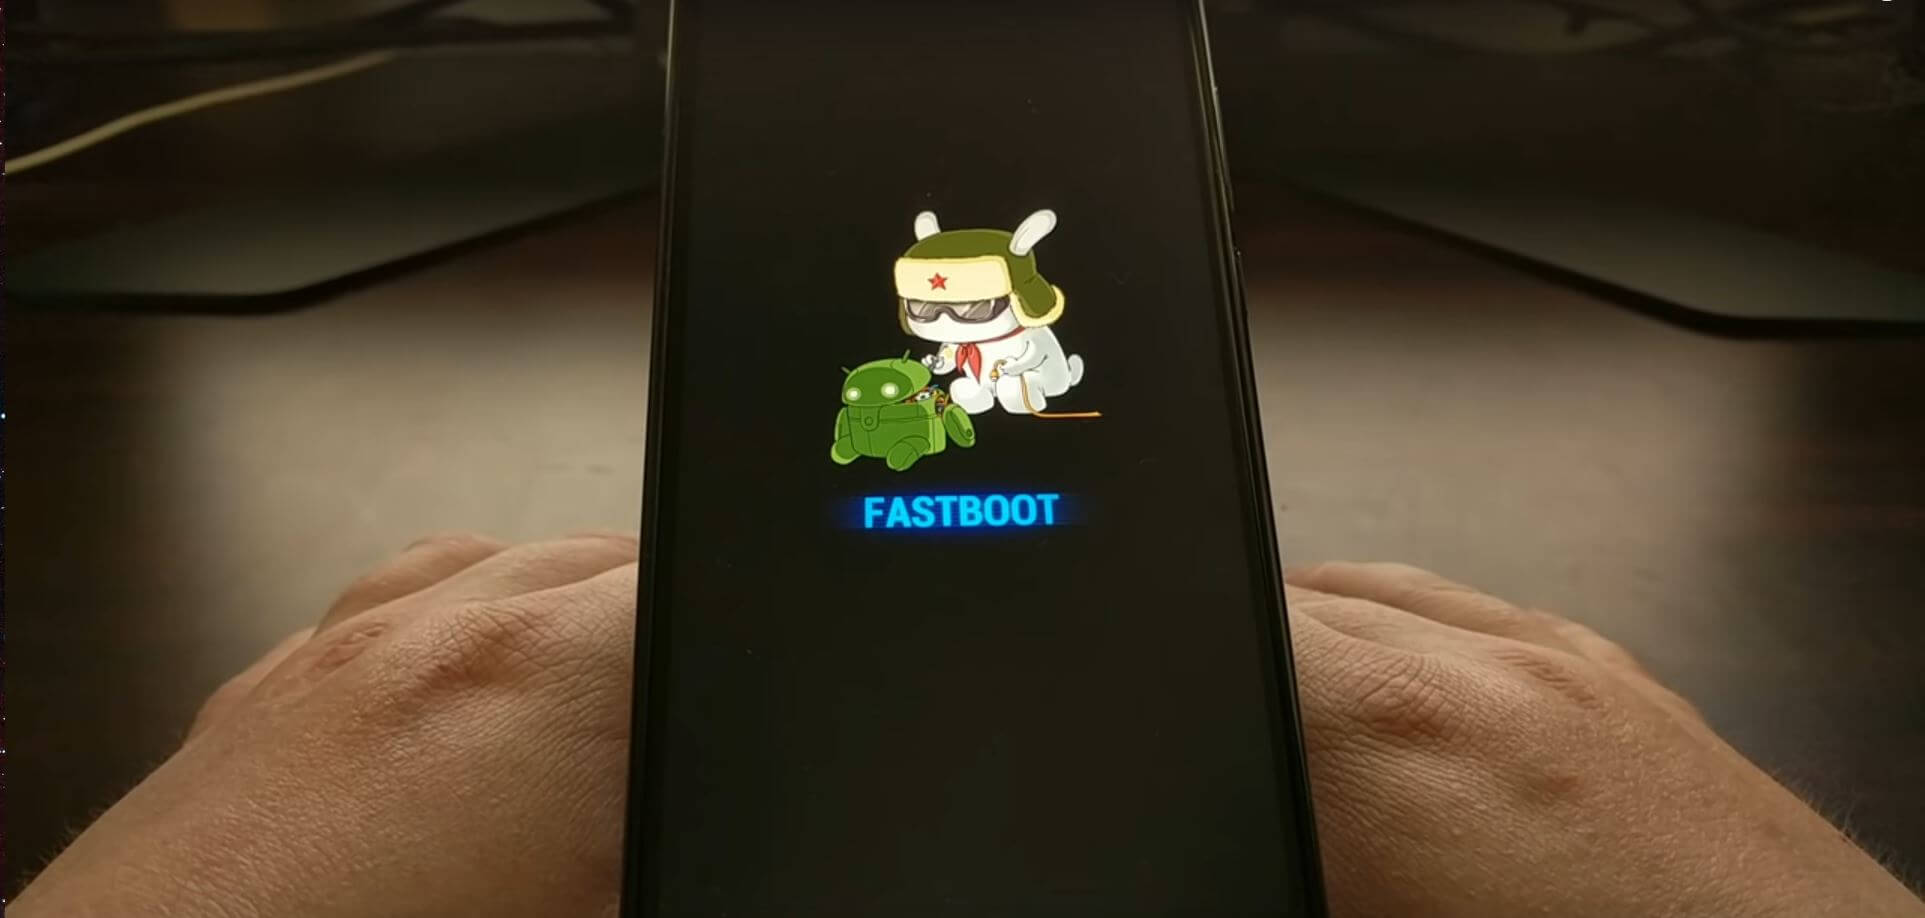 Fastboot redmi 8 pro. Fastboot Xiaomi Redmi Note 9 Pro. Xiaomi Redmi Note 8 Pro Fastboot. Fastboot Redmi Note 8. Xiaomi Redmi Note 6 Fastboot.